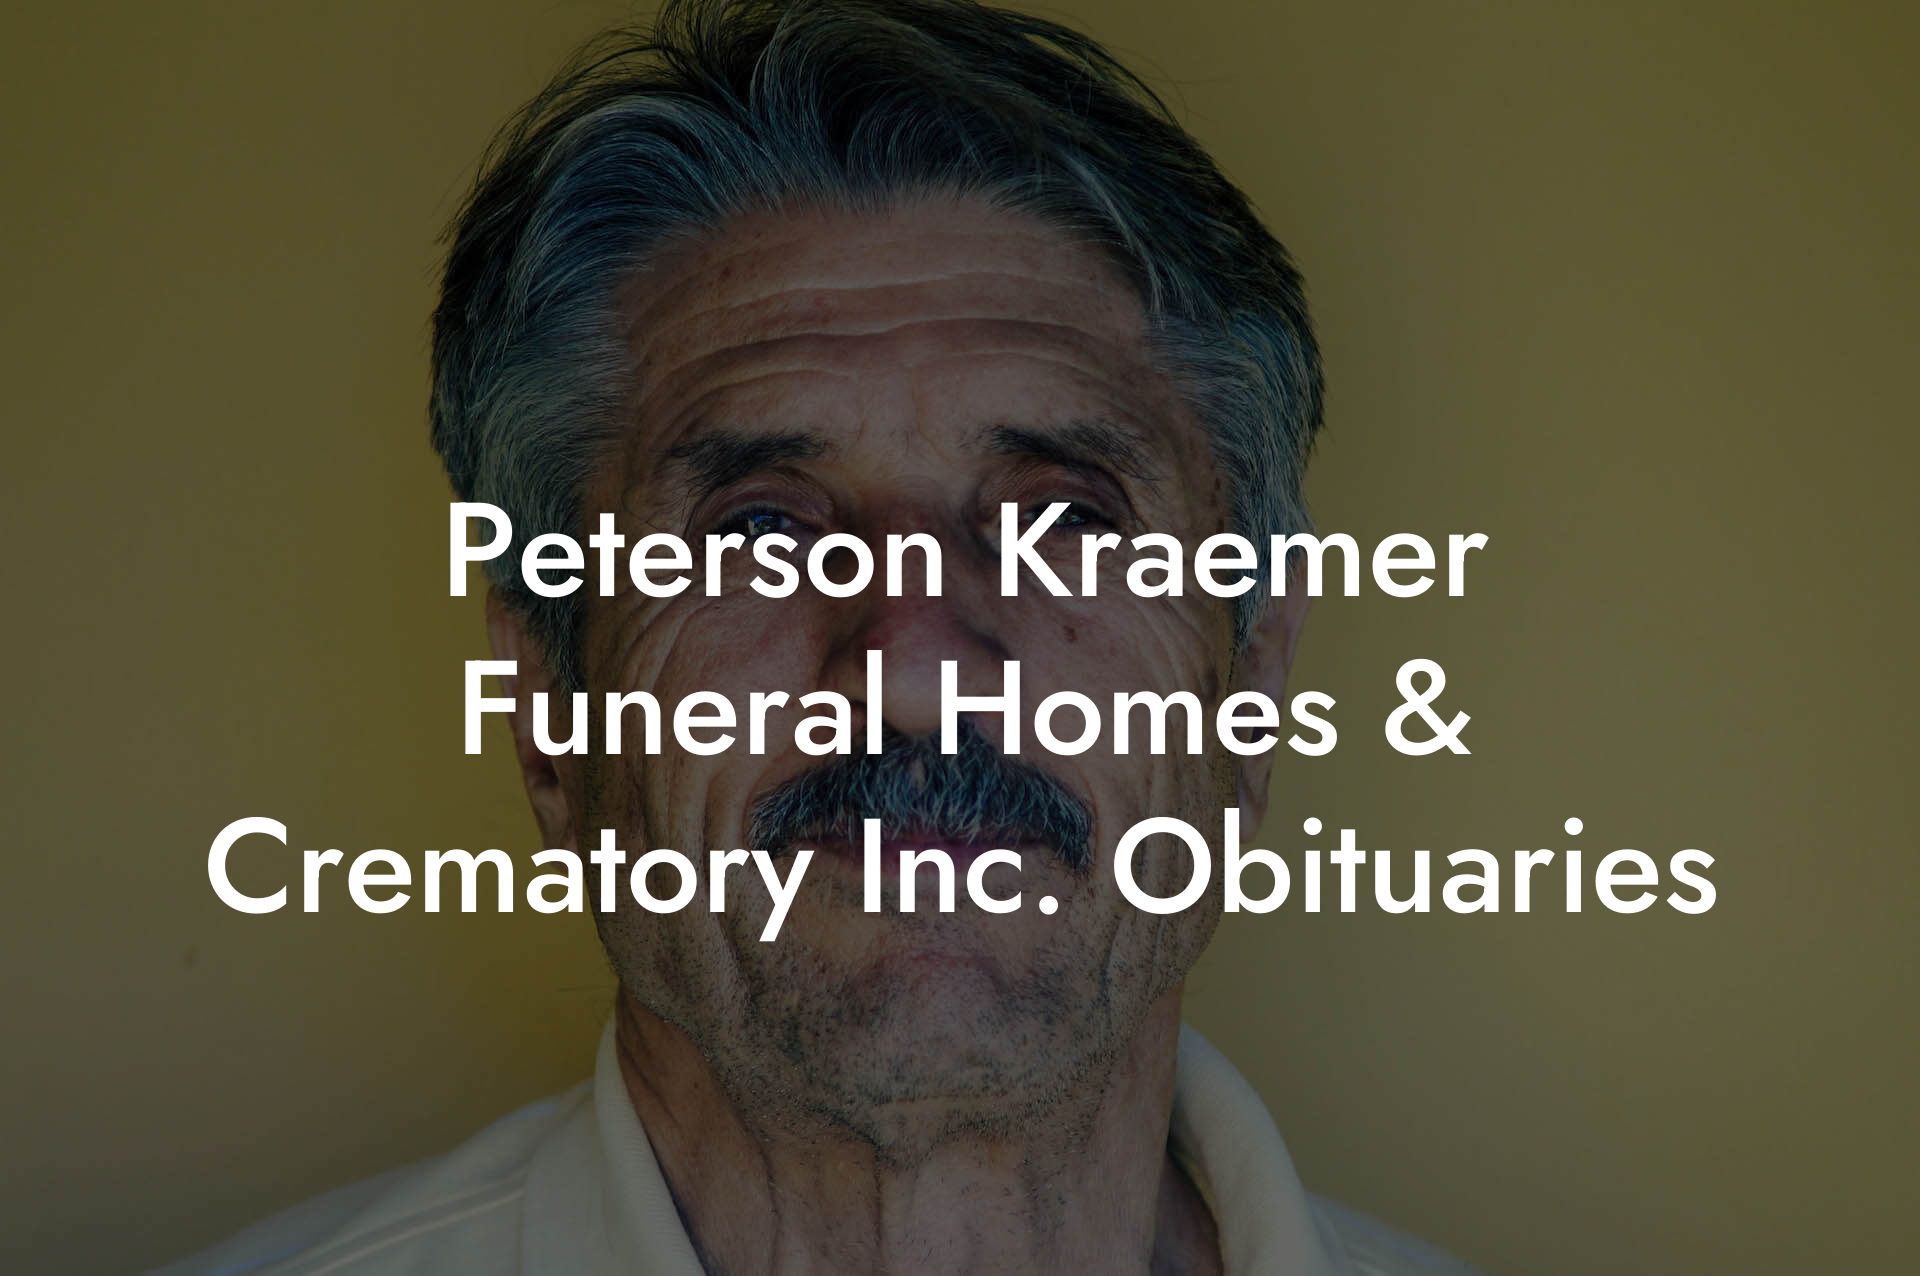 Peterson Kraemer Funeral Homes & Crematory Inc. Obituaries